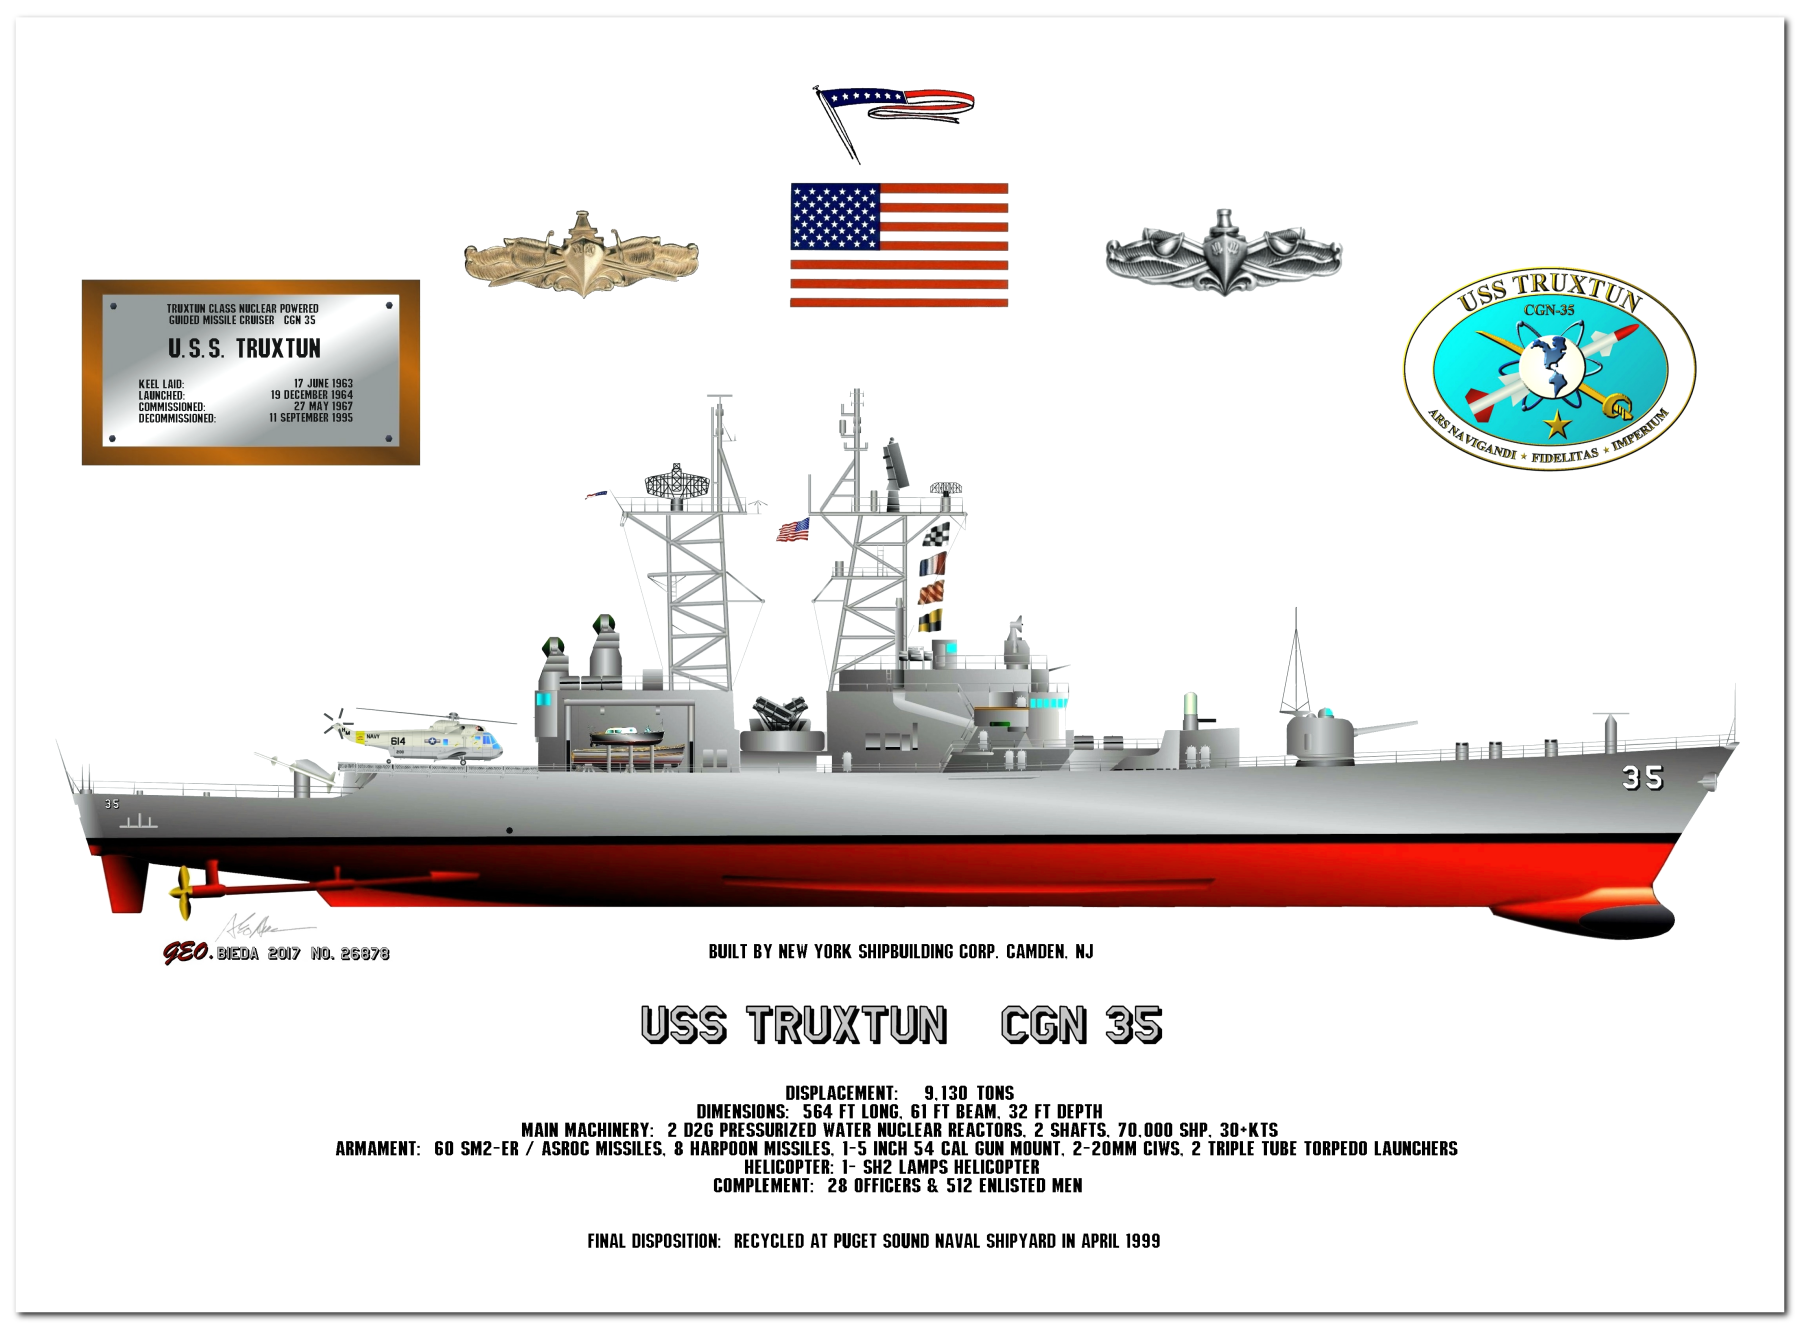 USS Truxtun CGN 35